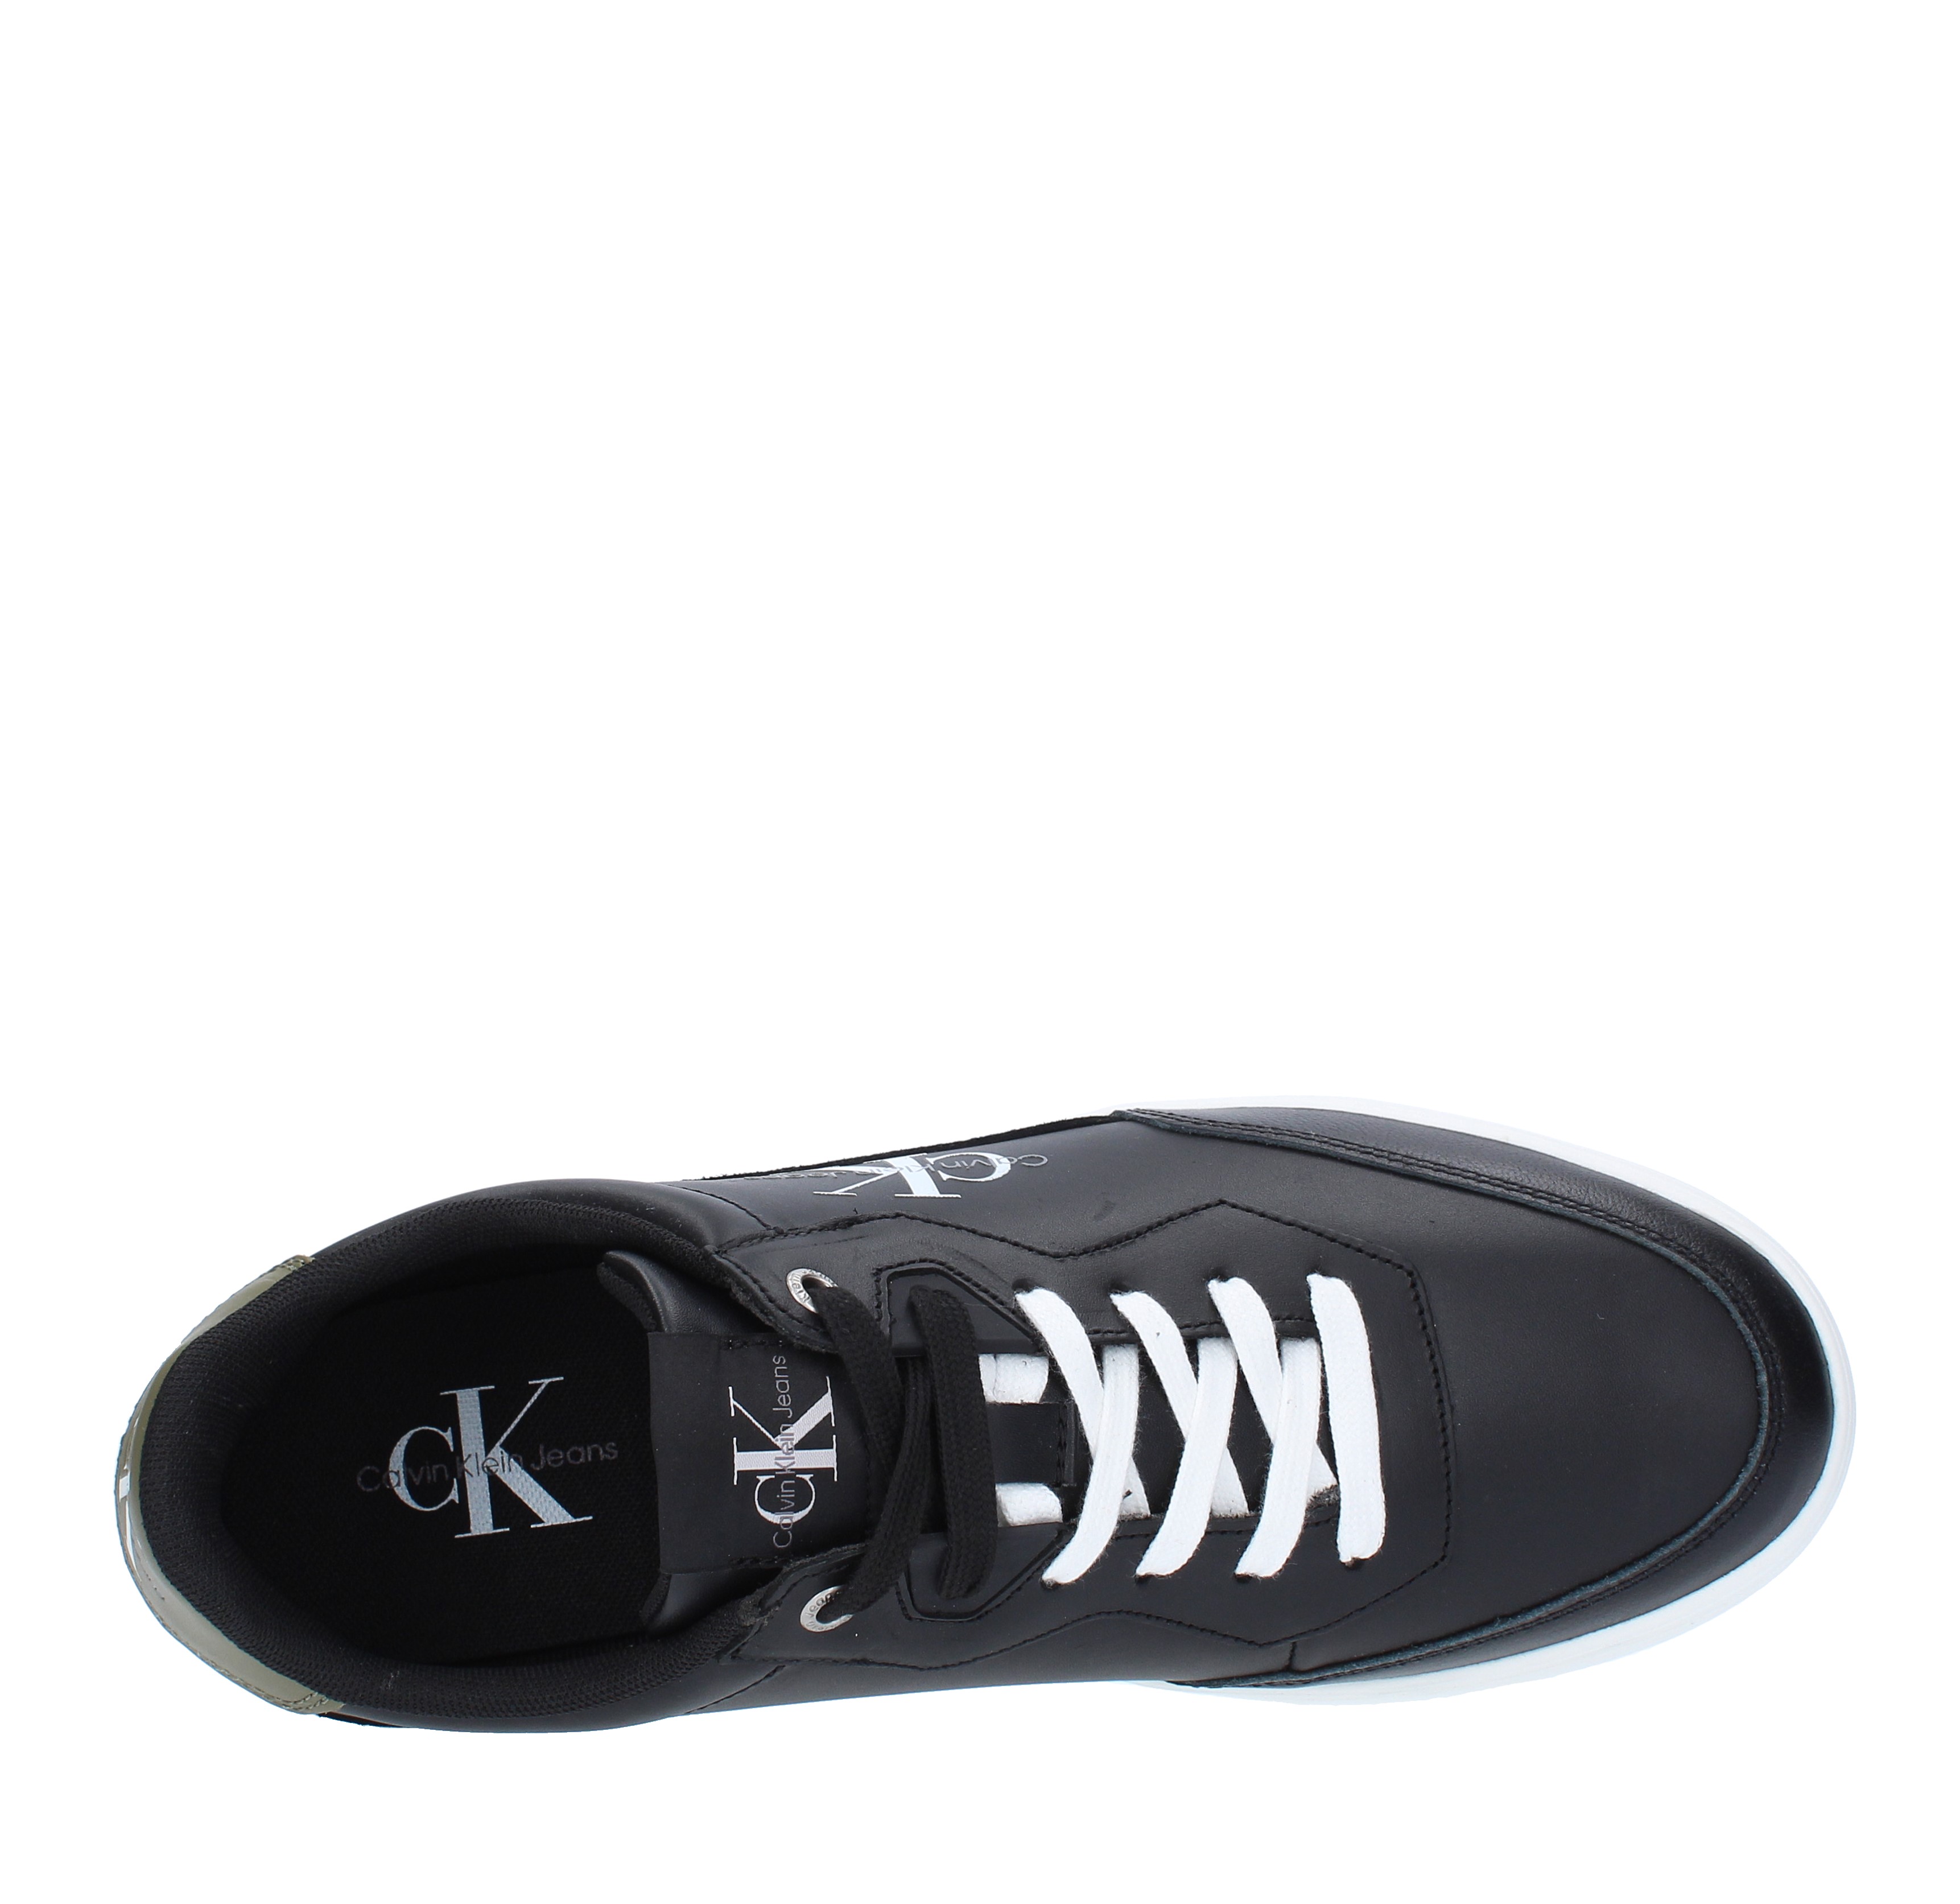 Sneakers in pelle - CALVIN KLEIN - Ginevra calzature